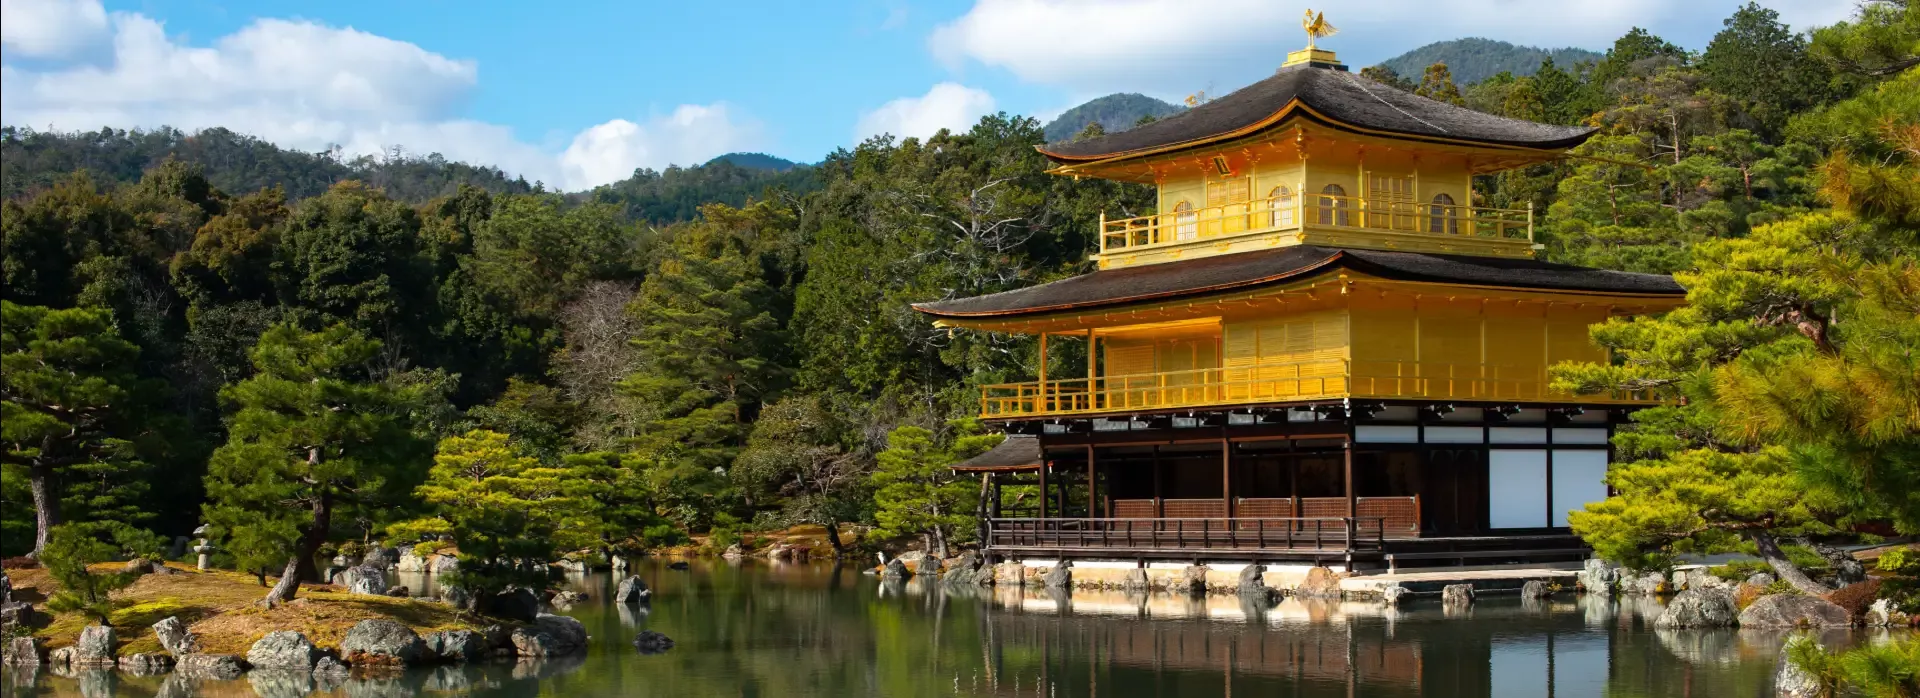 Japan Kyoto Gouden Tempel